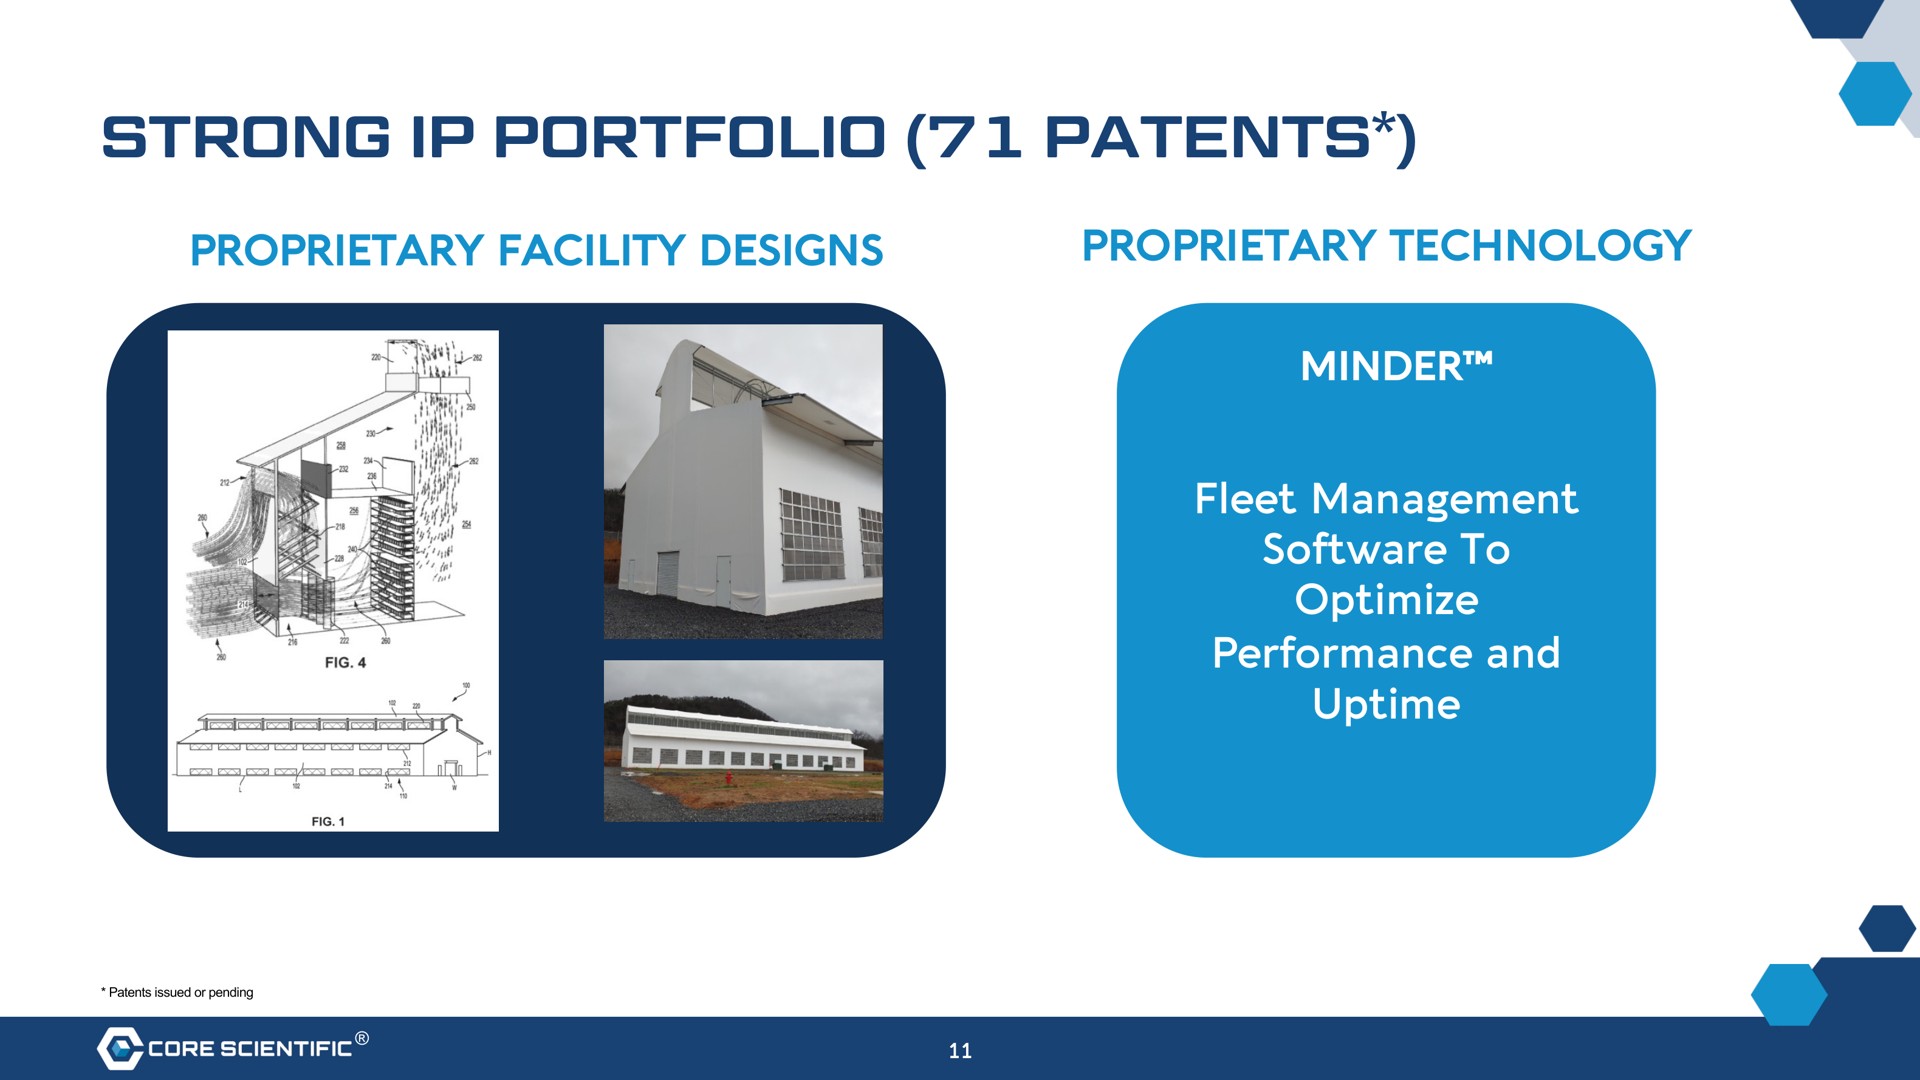 strong portfolio patents | Core Scientific